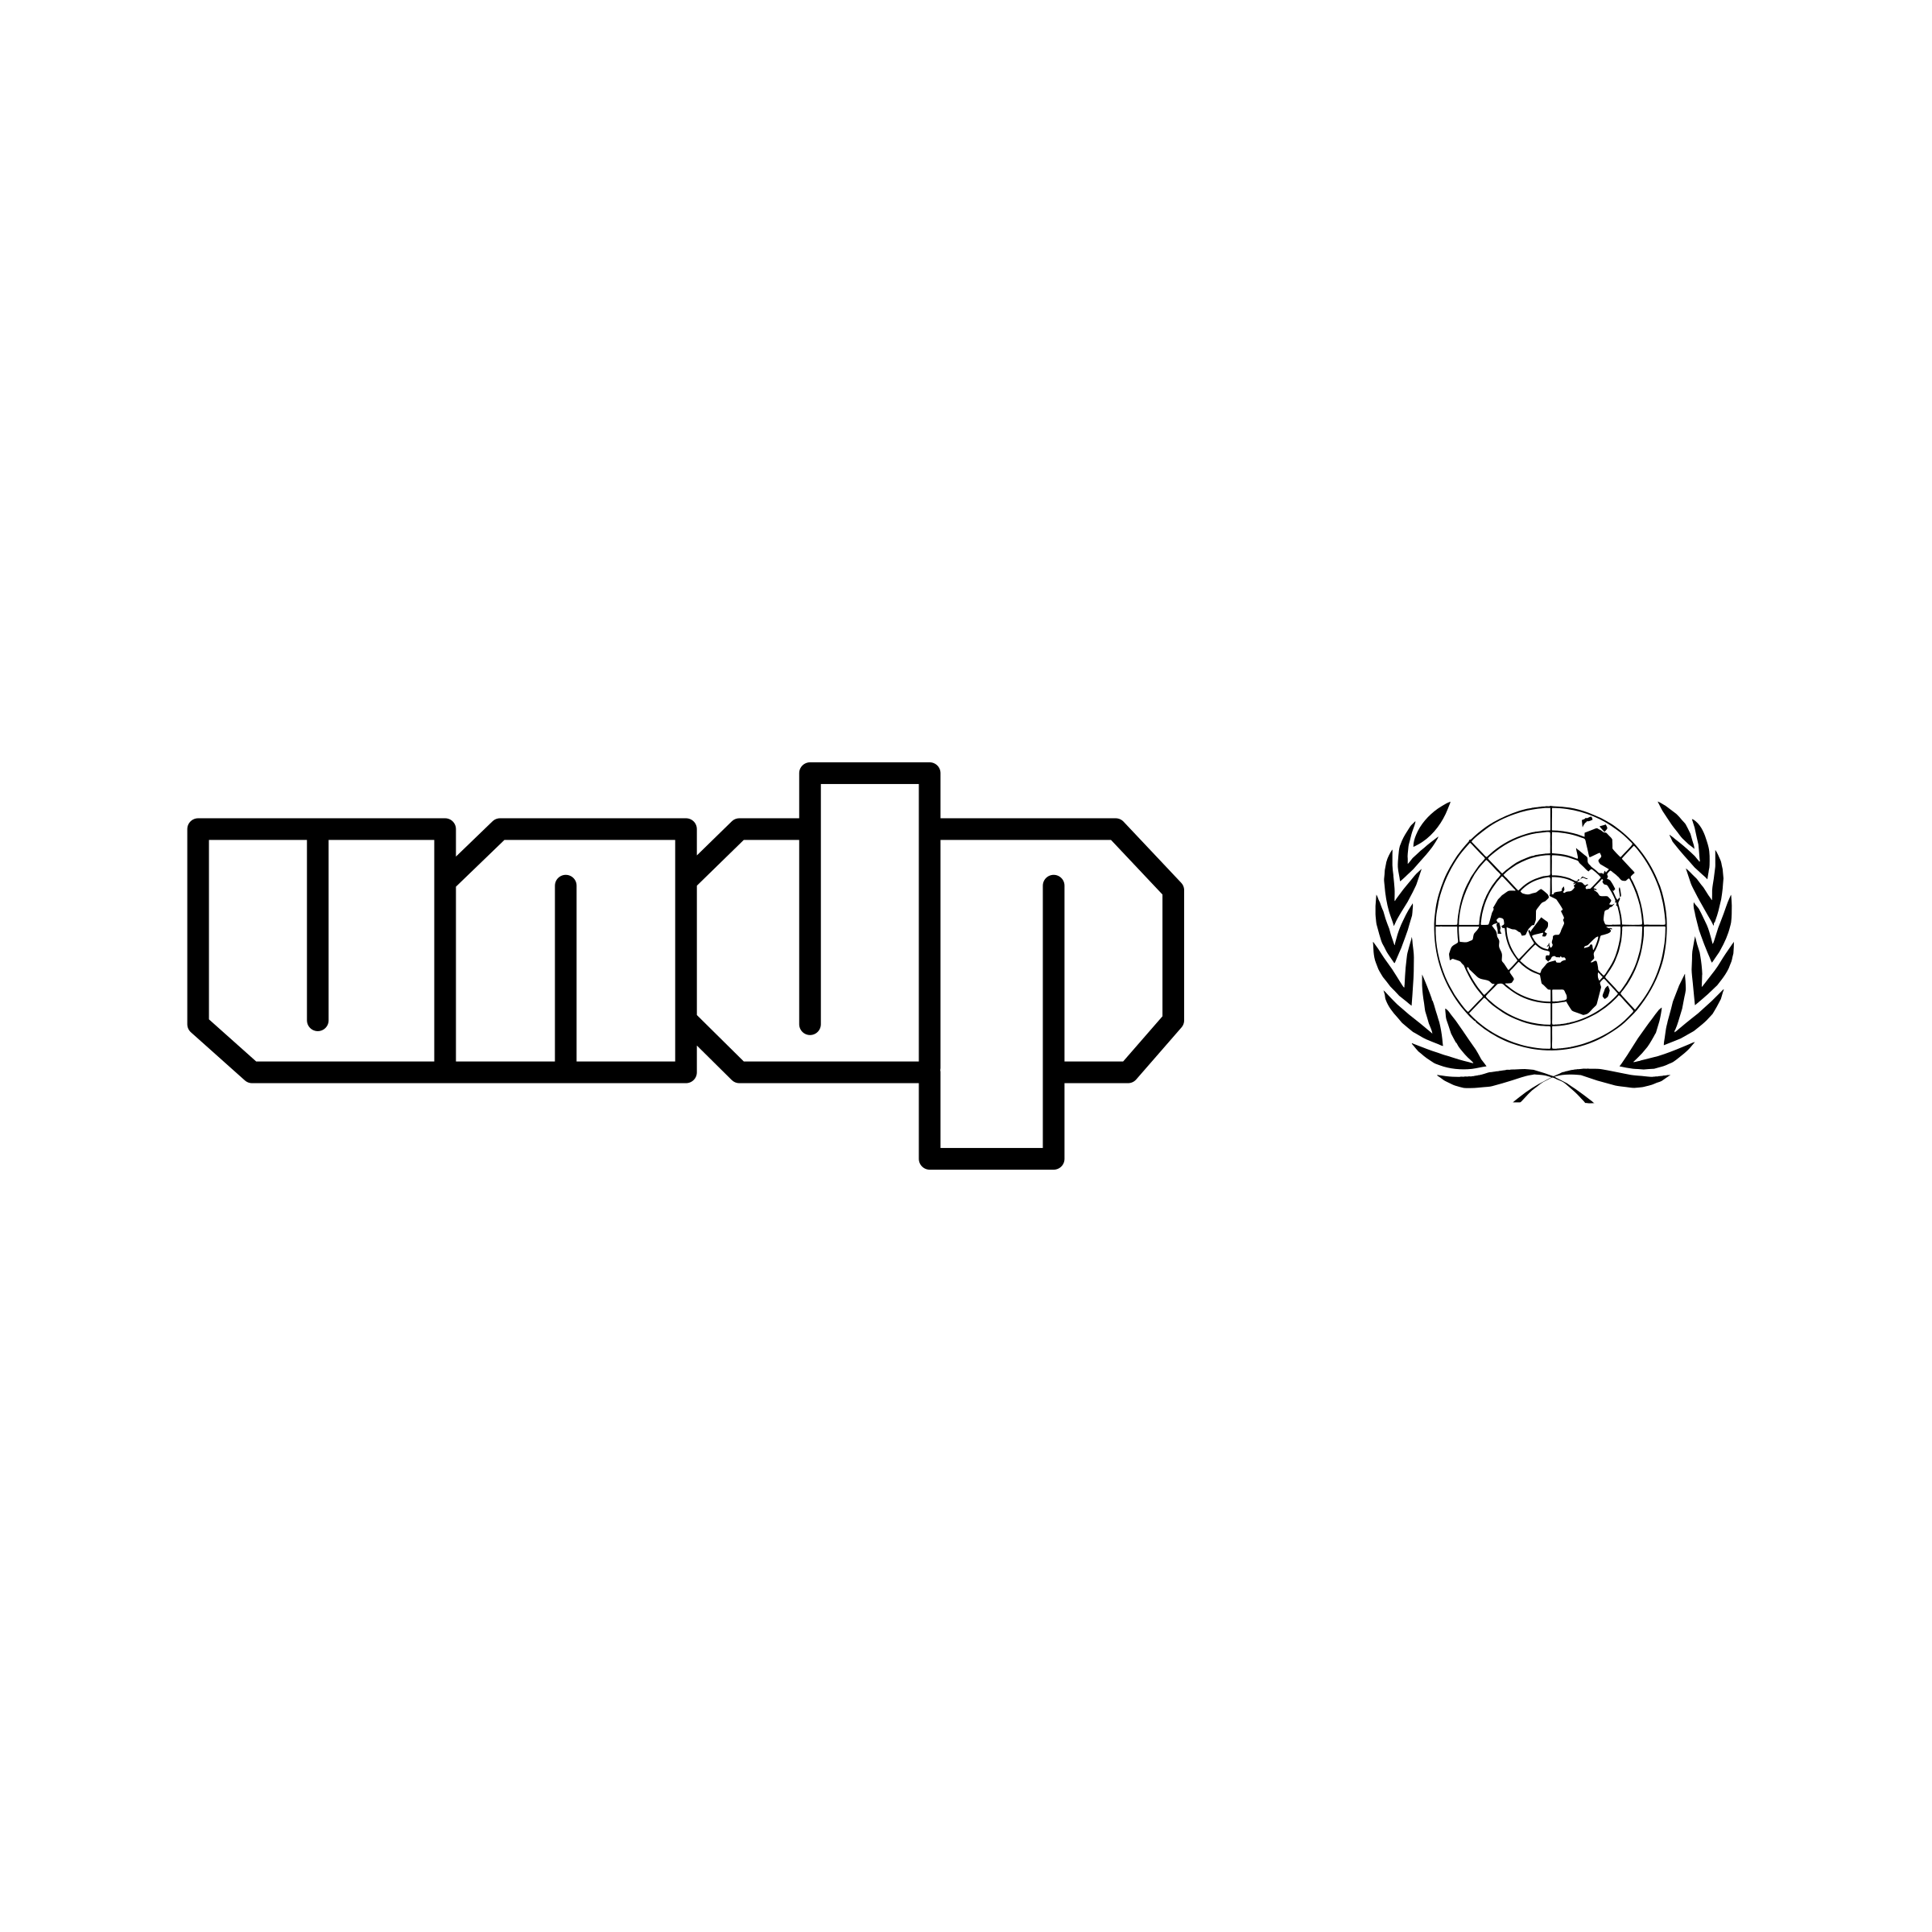 UNDP Logo PNG Transparent & SVG Vector.